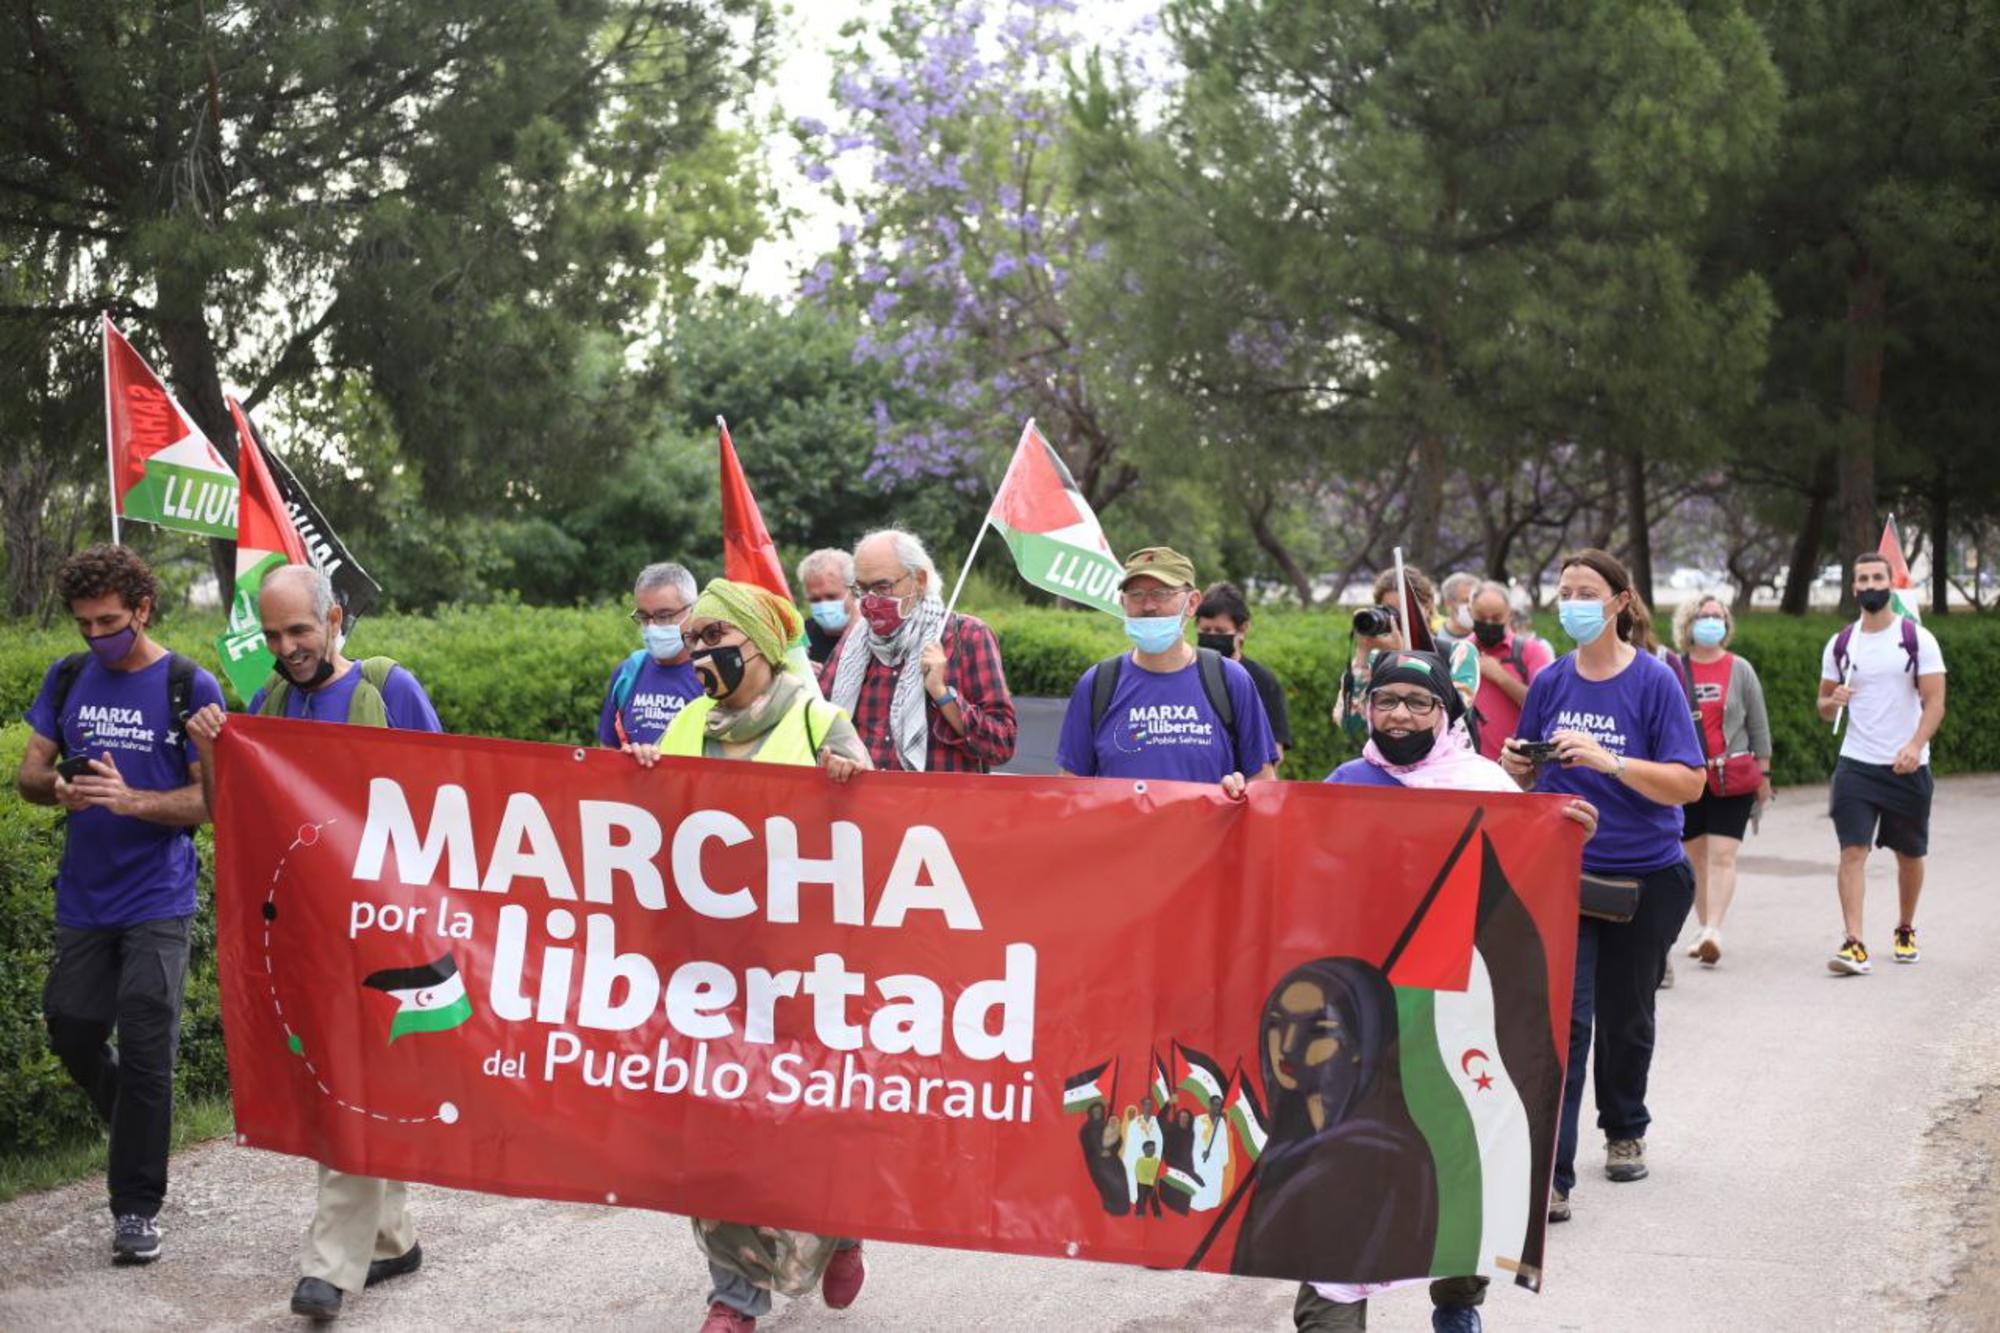 Marcha saharahui País Valencià - 1